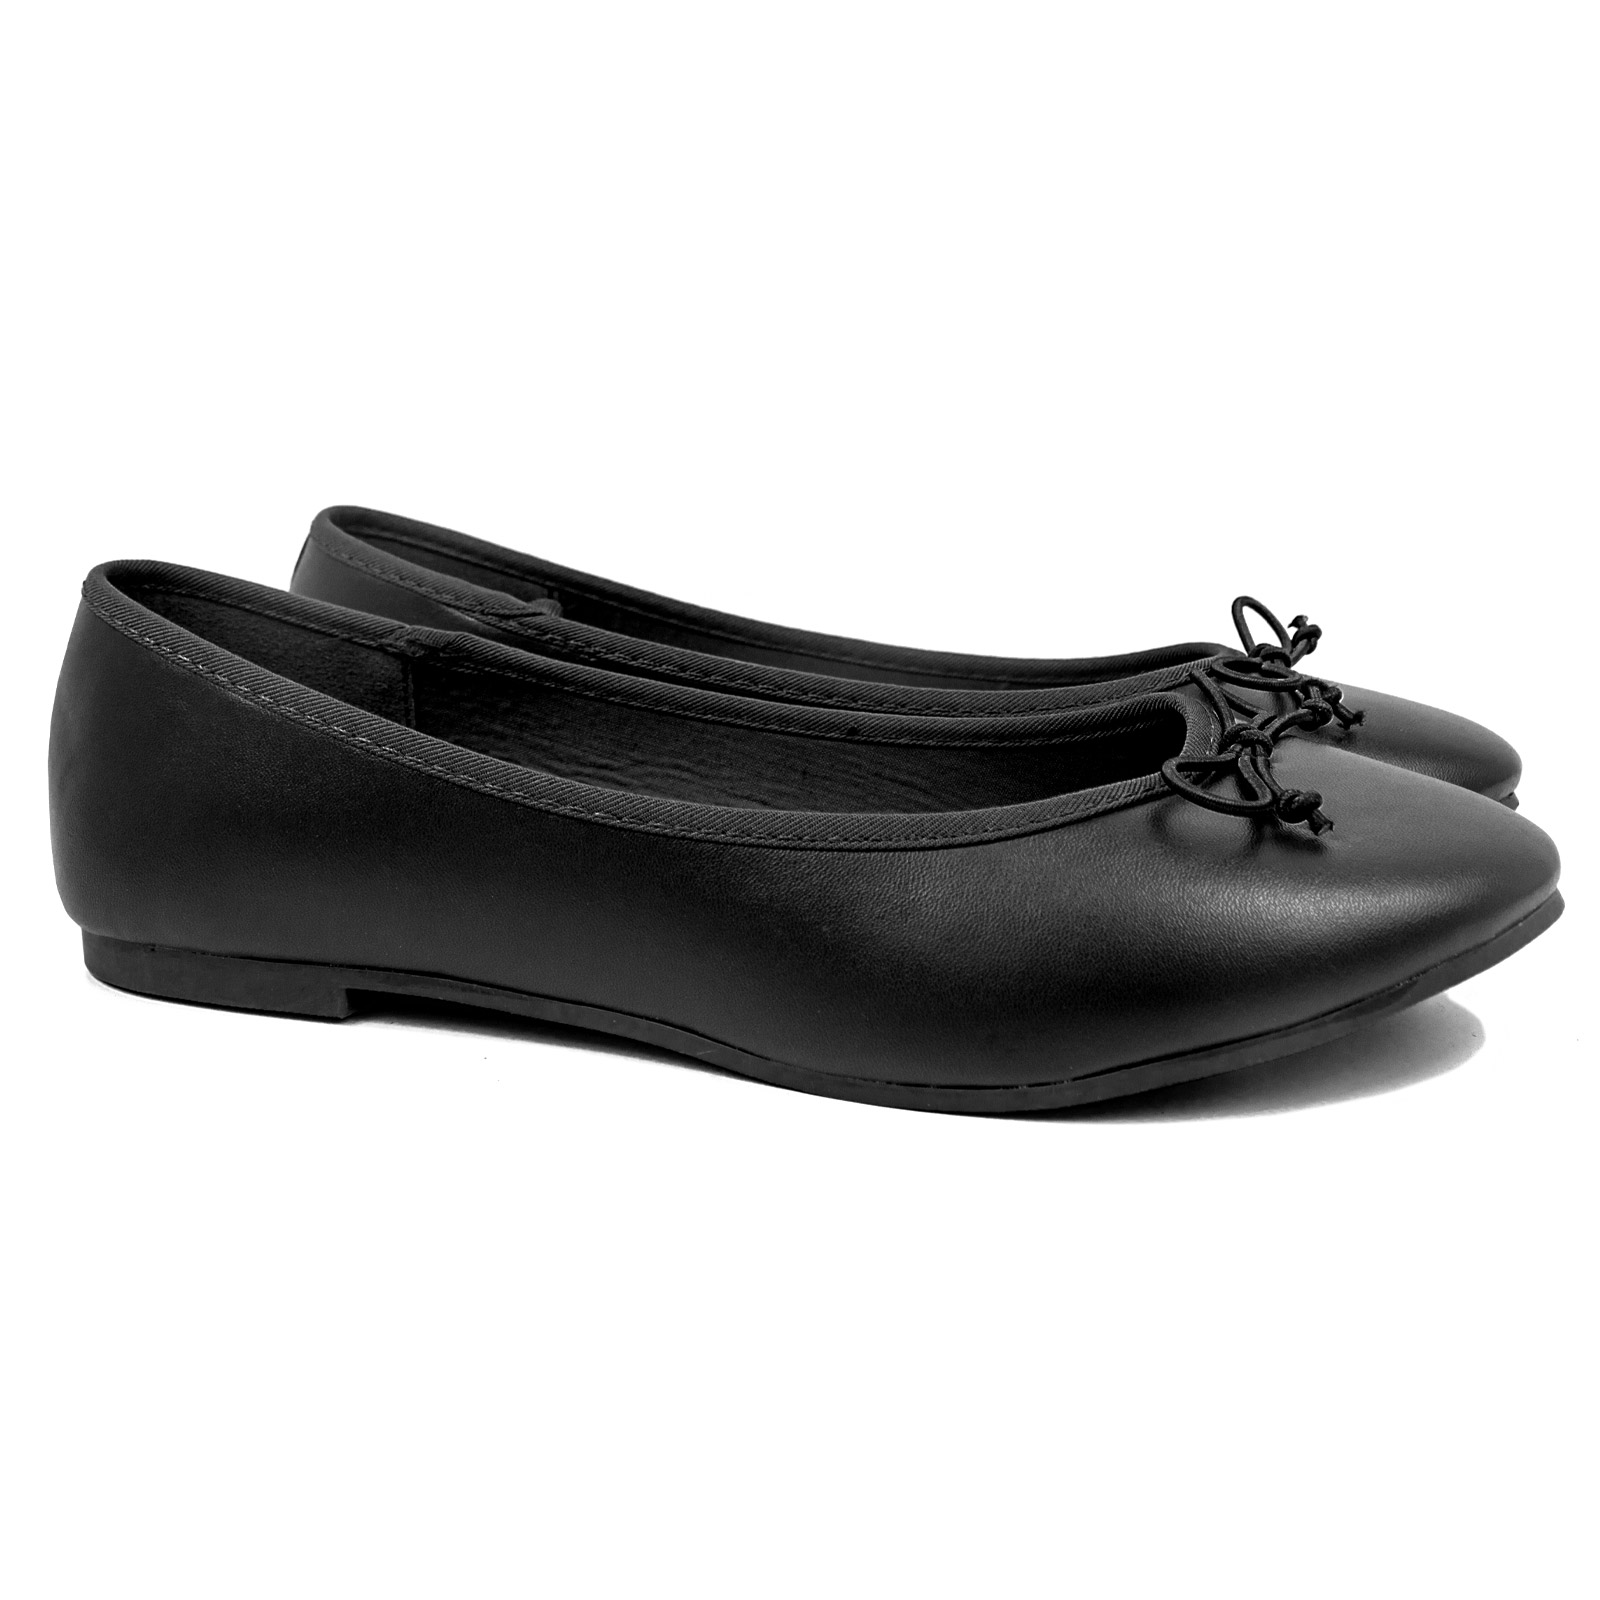 Ex Store Ladies Womens Flat Ballerina Ballet Pumps Shoes Size 4 5 6 7 8 Ebay